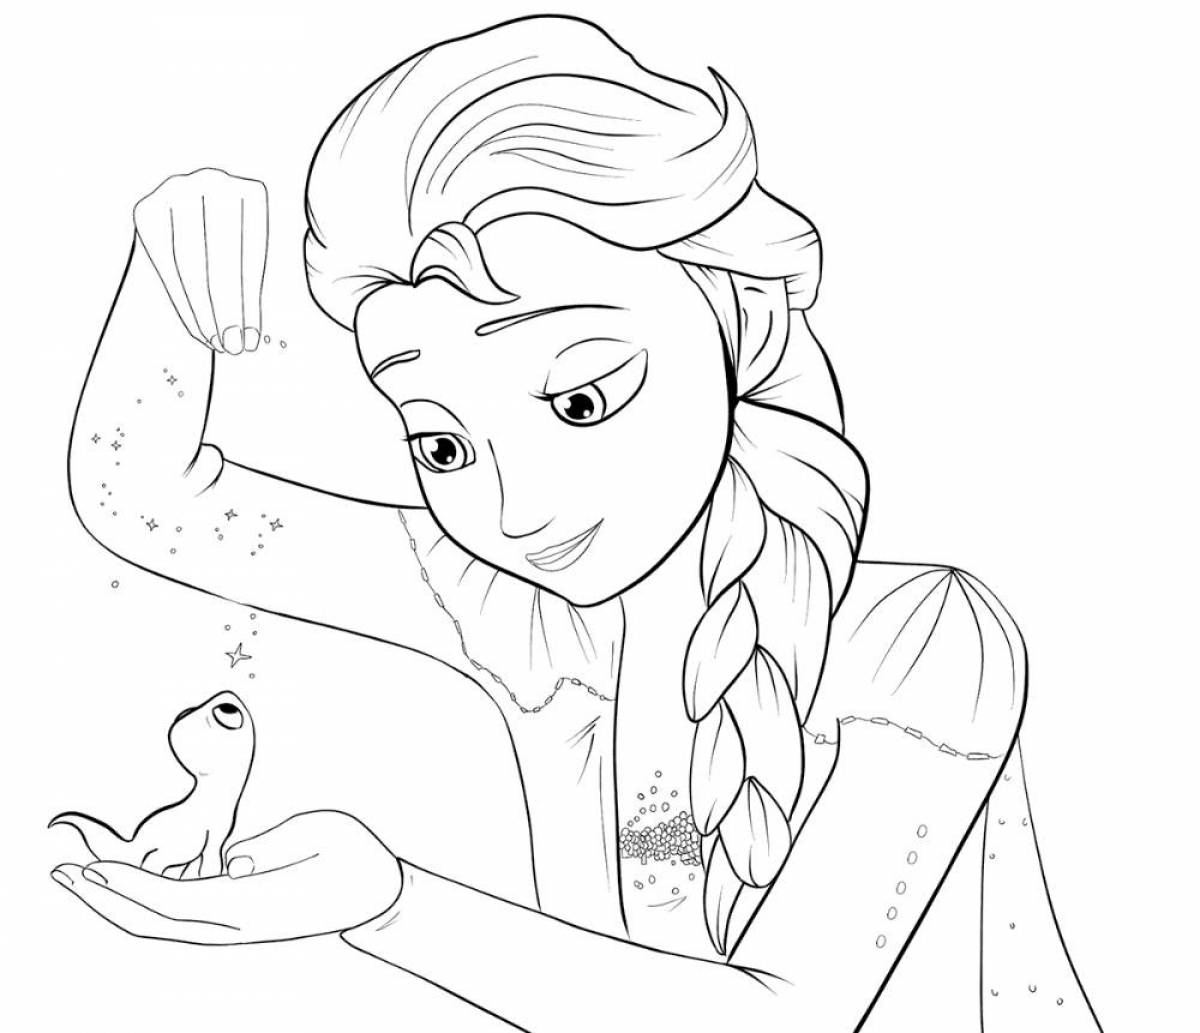 Elsa majestic coloring book for kids